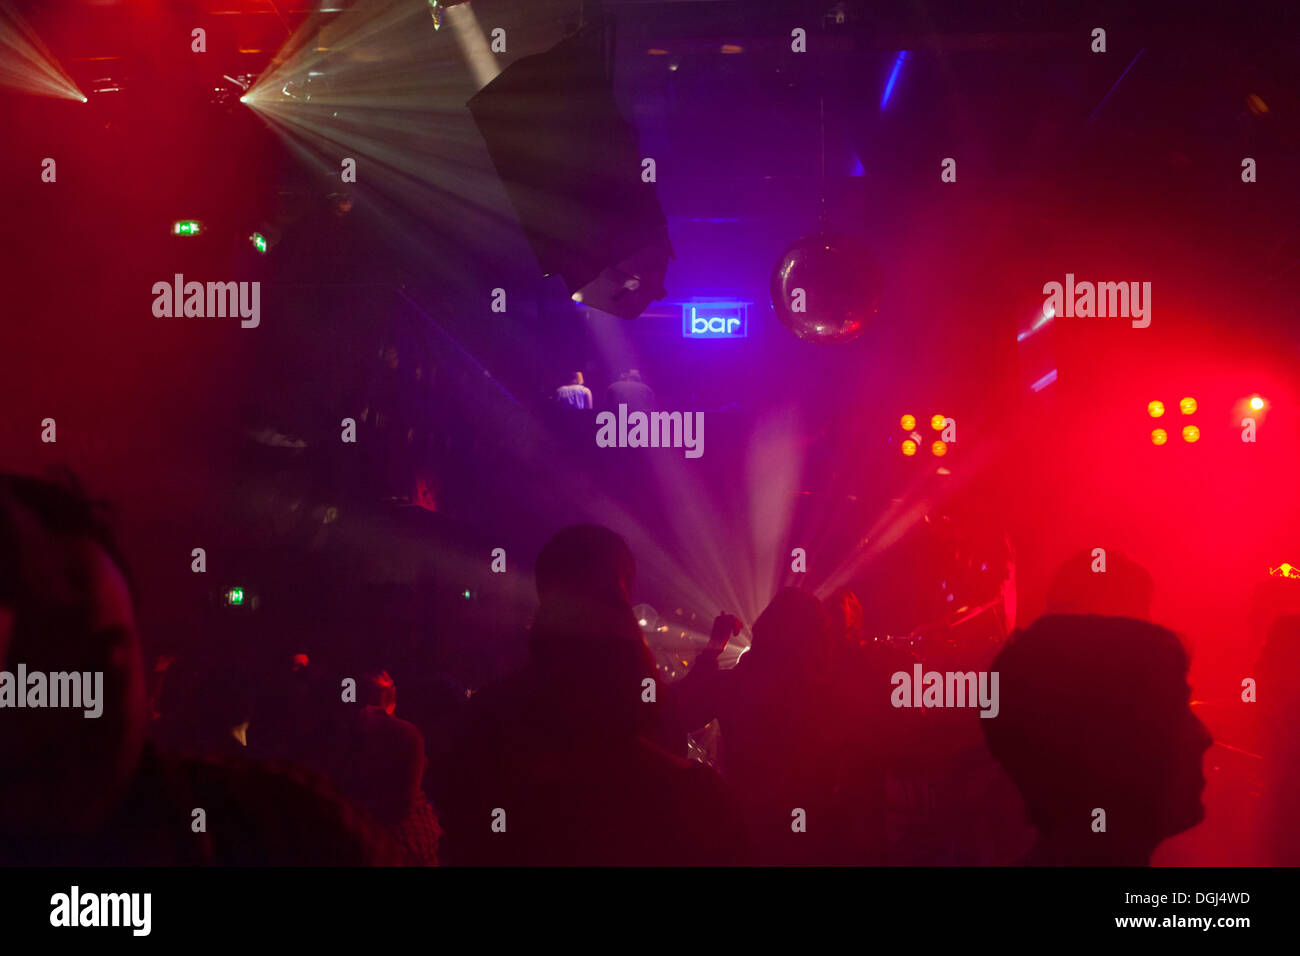 Nightclub scene with people dancing, disco ball, lighting equipment Stock Photo